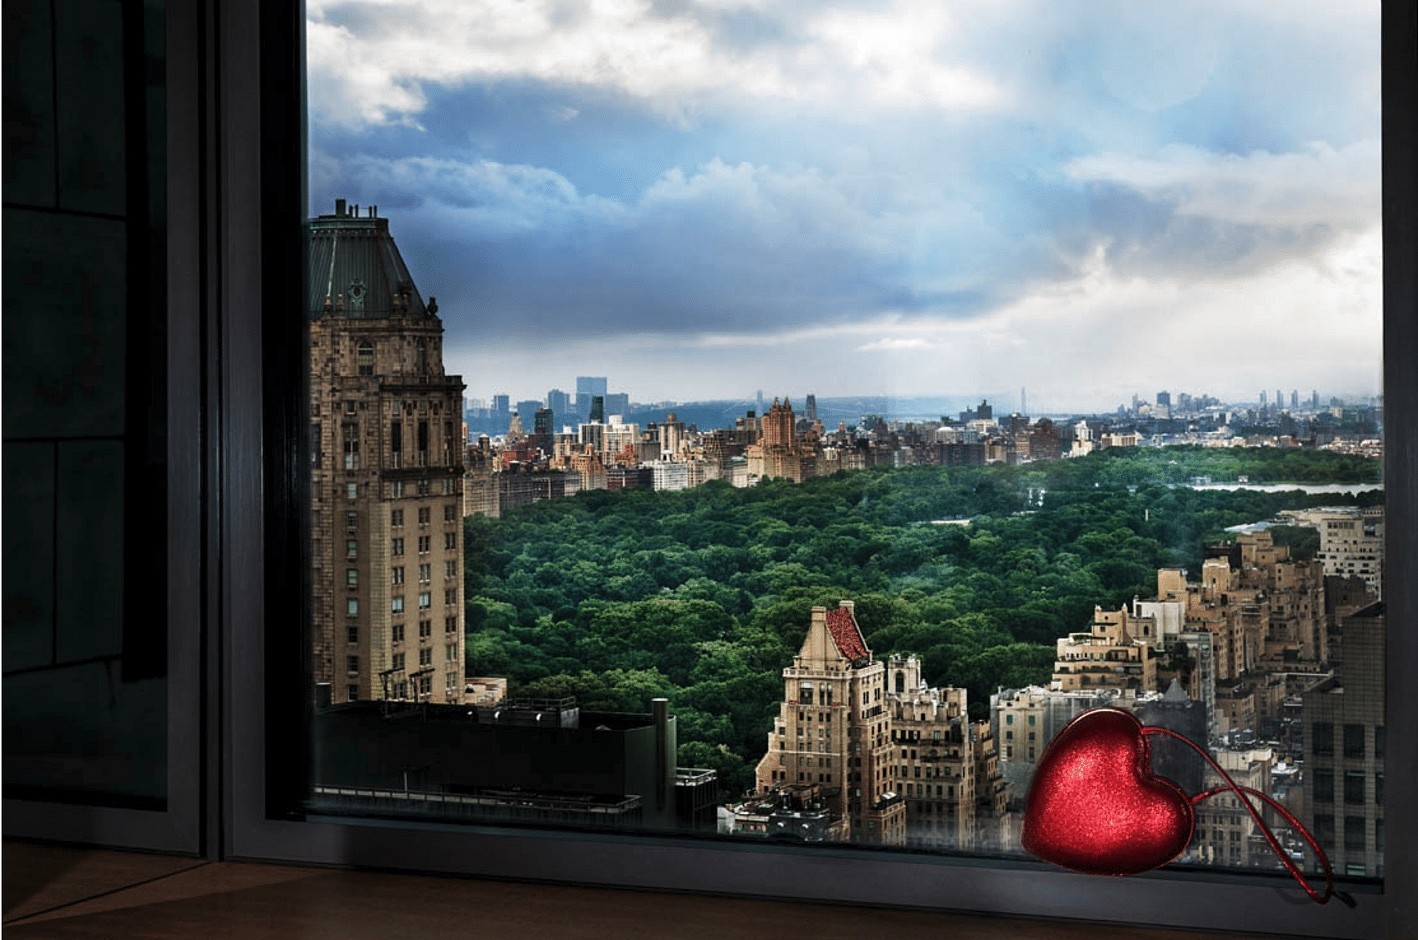 David Drebin, Love Over Central Park, 2019
48 x 72 and 30 x 45 inches